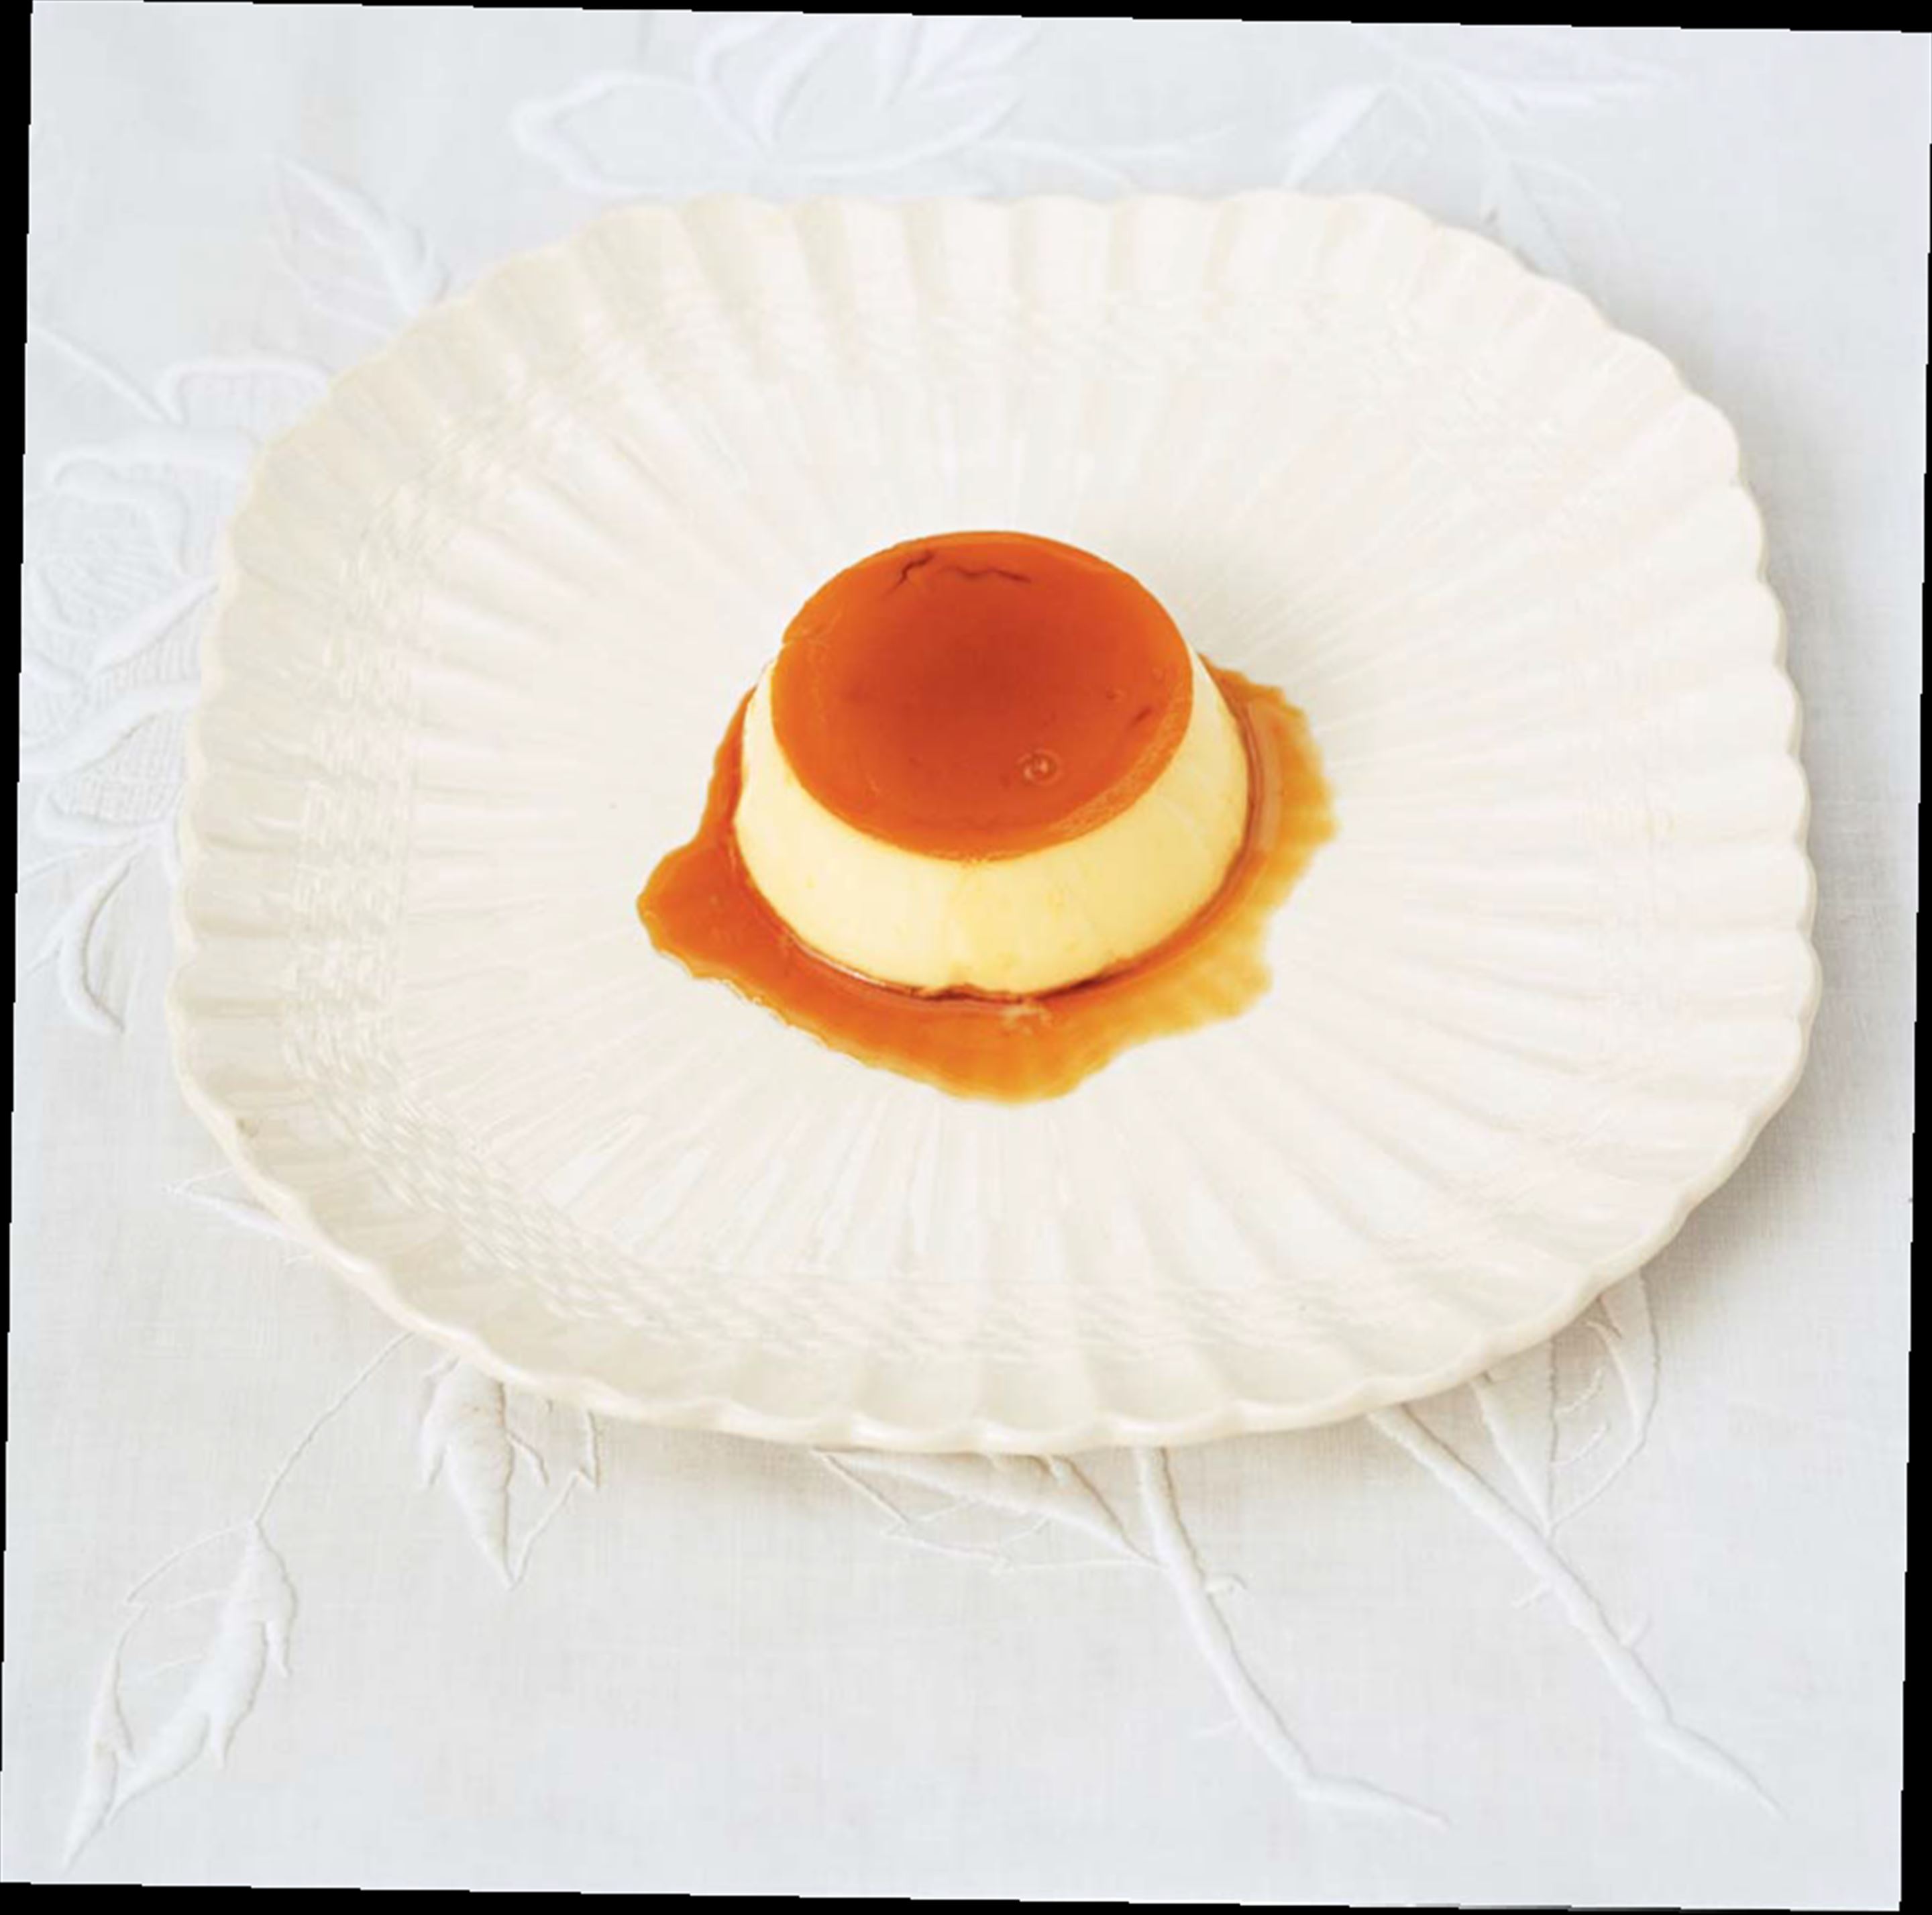 Crème caramel with pedro ximénez